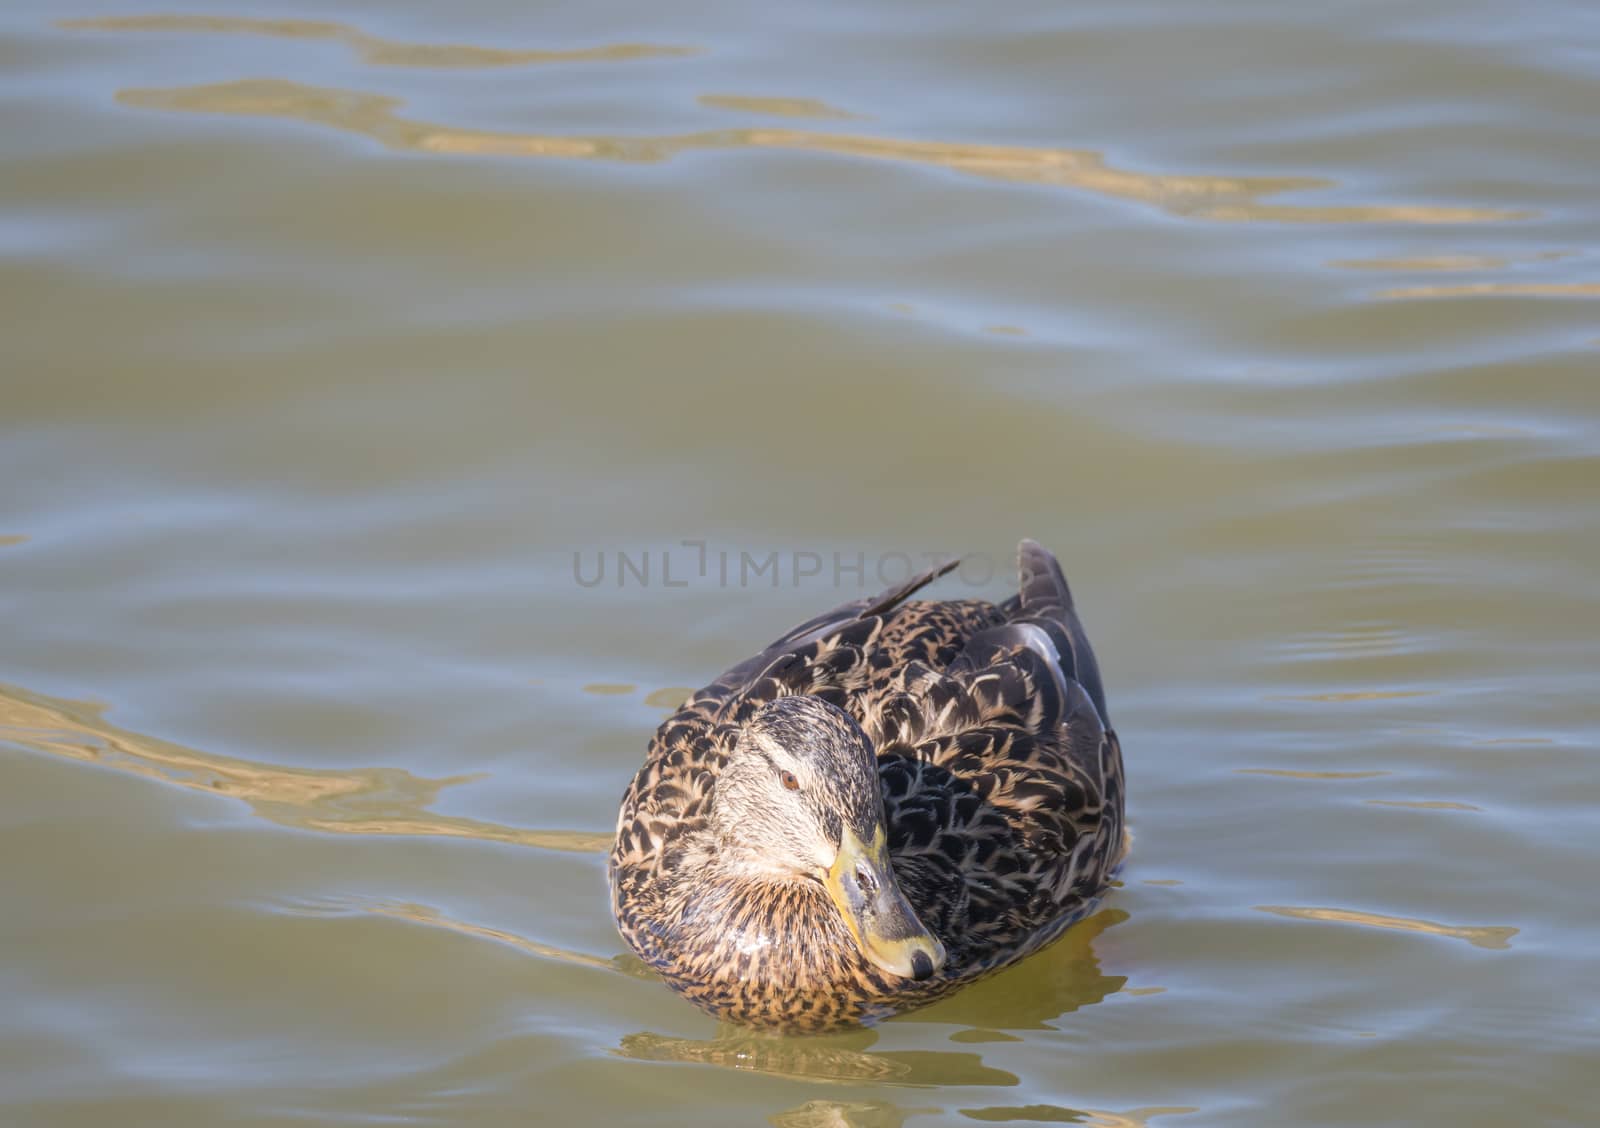 Close up mallard, Anas platyrhynchos, female duck bird swimming on lake water suface in sunlight. Selective focus.